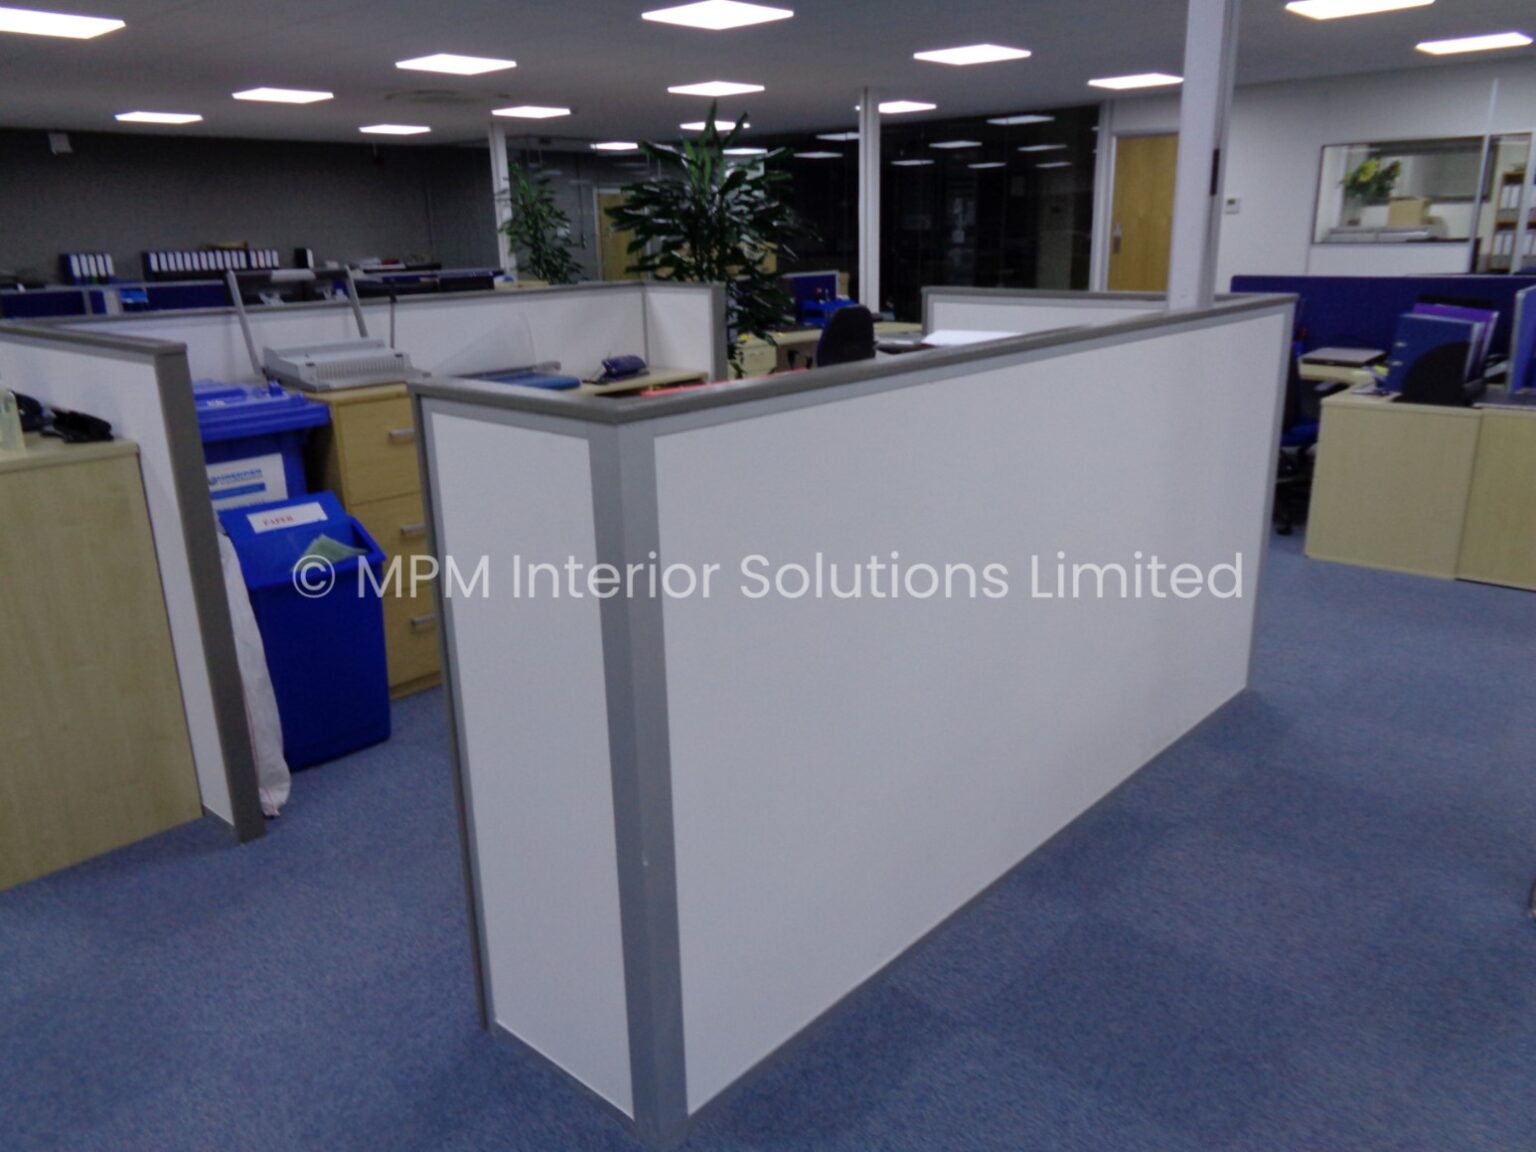 50mm Demountable Office Partitioning, Keysource Ltd (Horsham, West Sussex), MPM Interior Solutions Limited